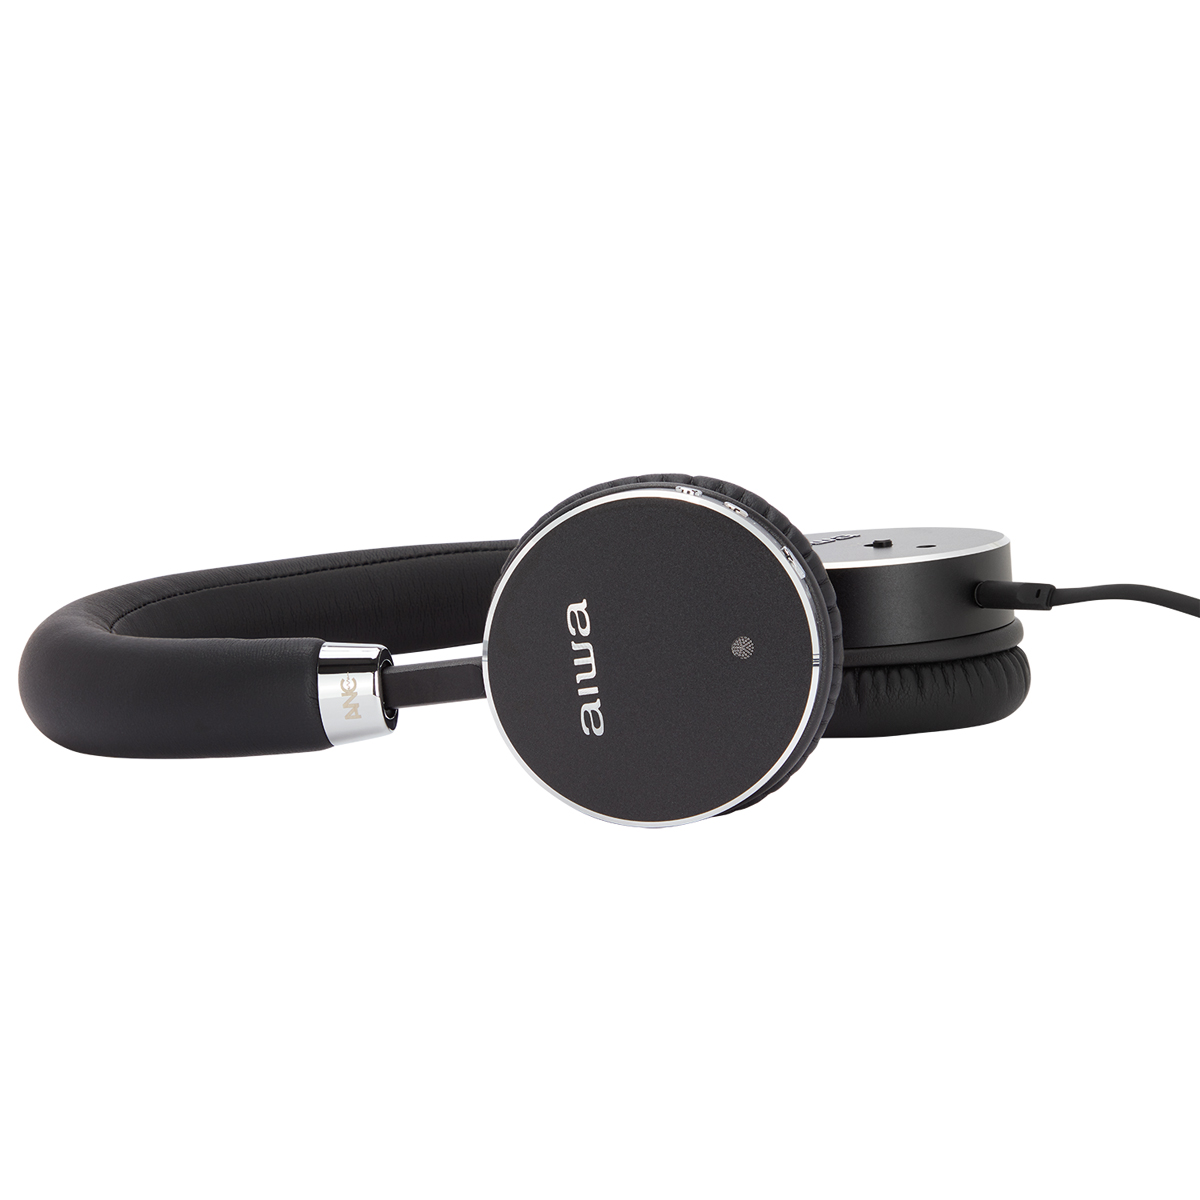 Schwarz ANC On-ear AIWA HSTBTN-800BK, Bluetooth Kopfhörer